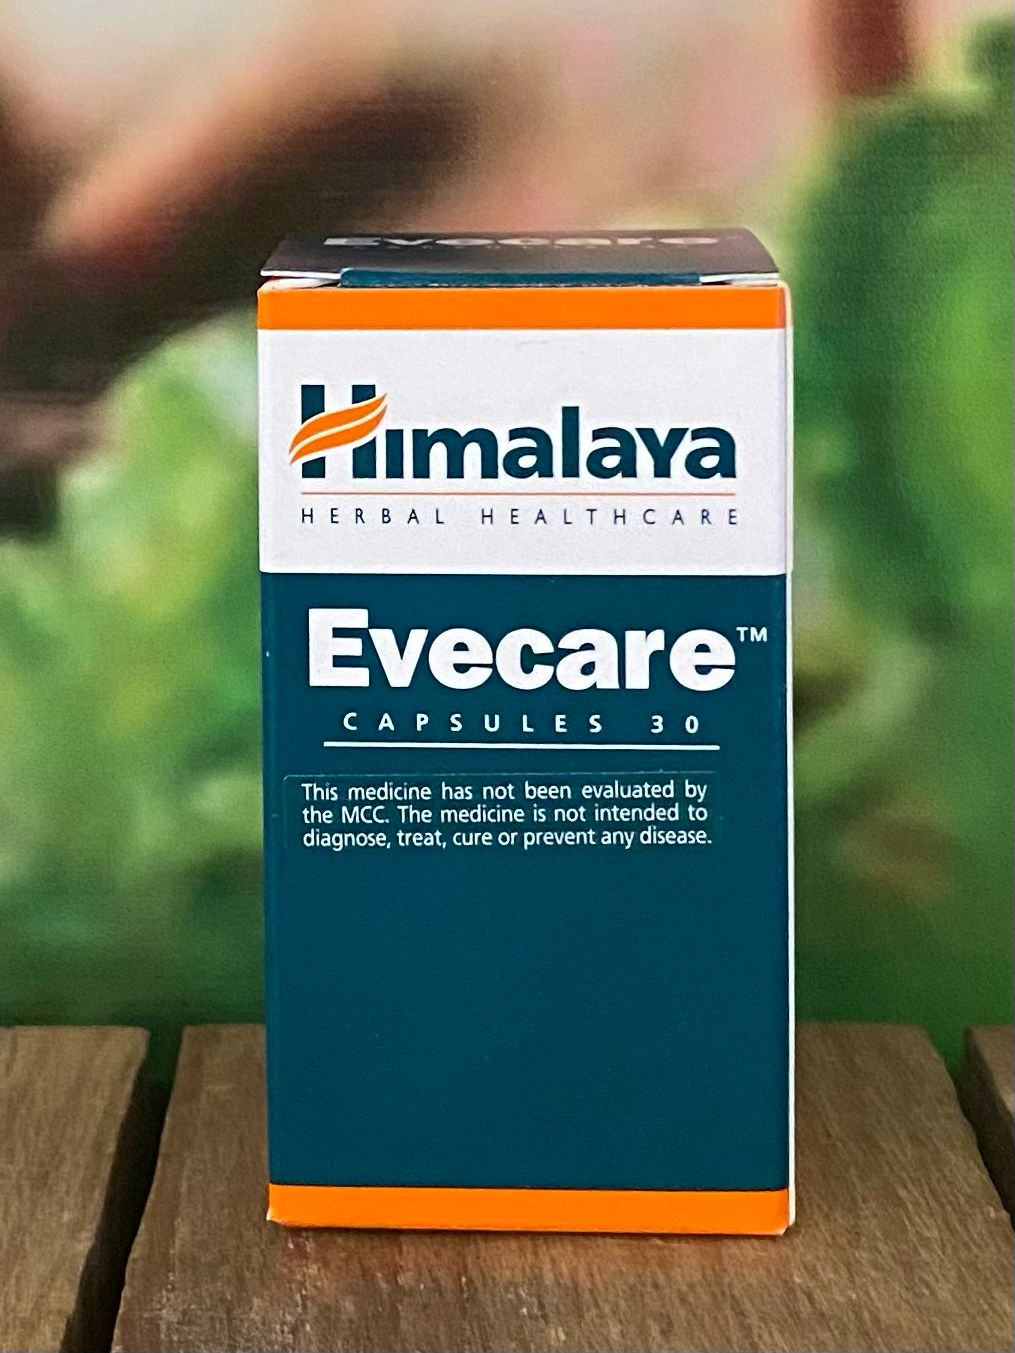 Himalaya Evecare 30 tablets